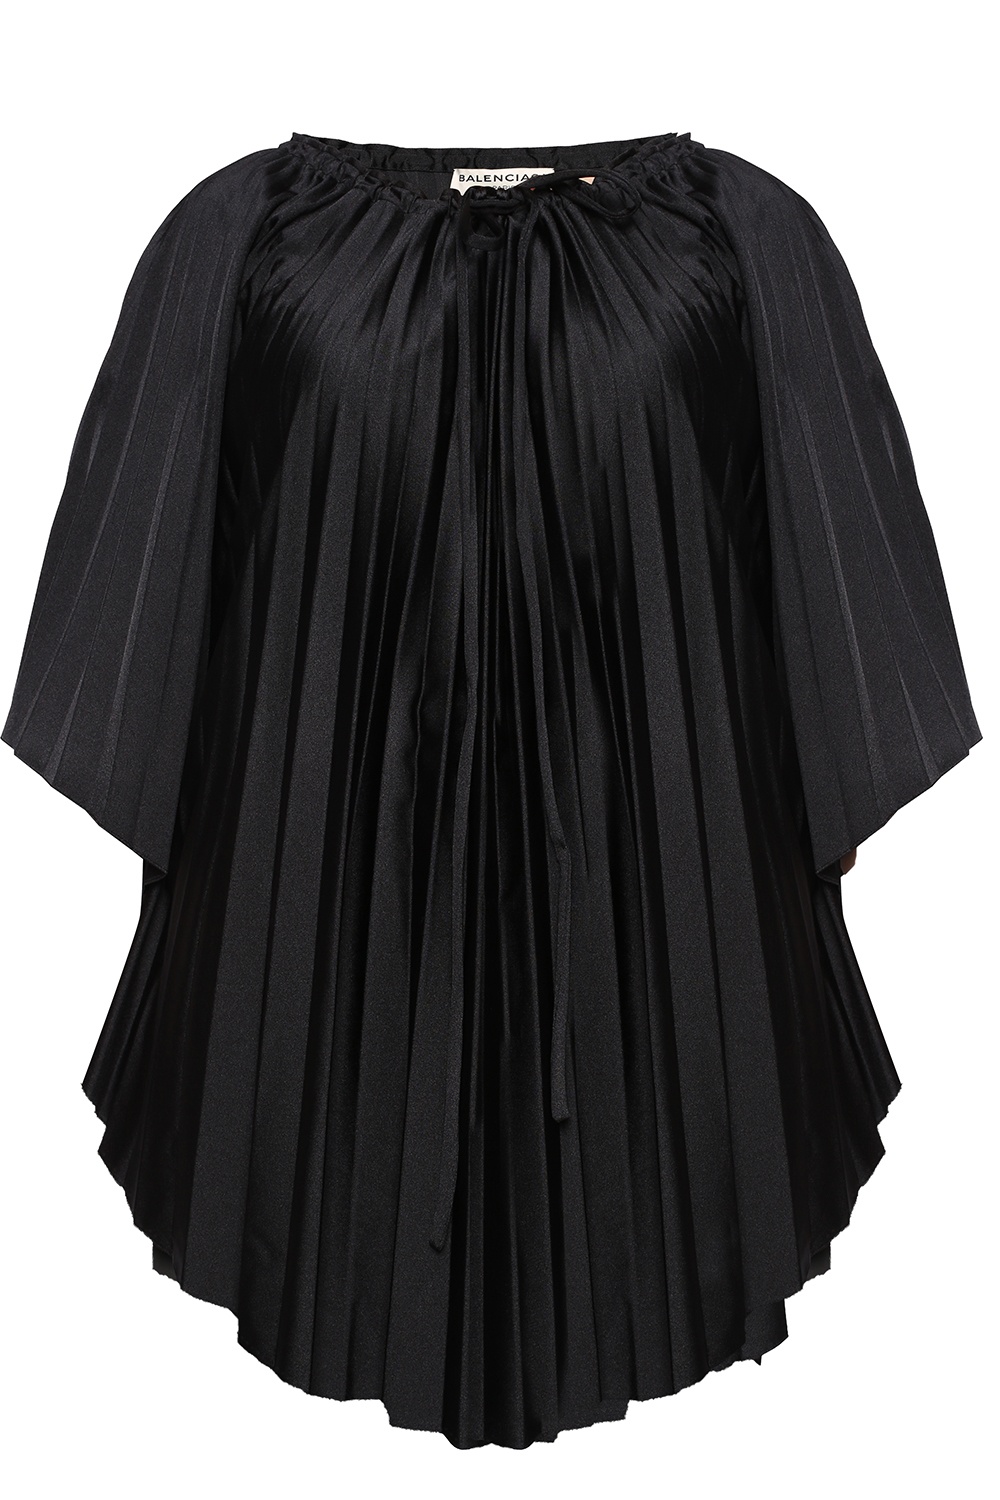 Balenciaga Pleated blouse | Women's Clothing | Vitkac